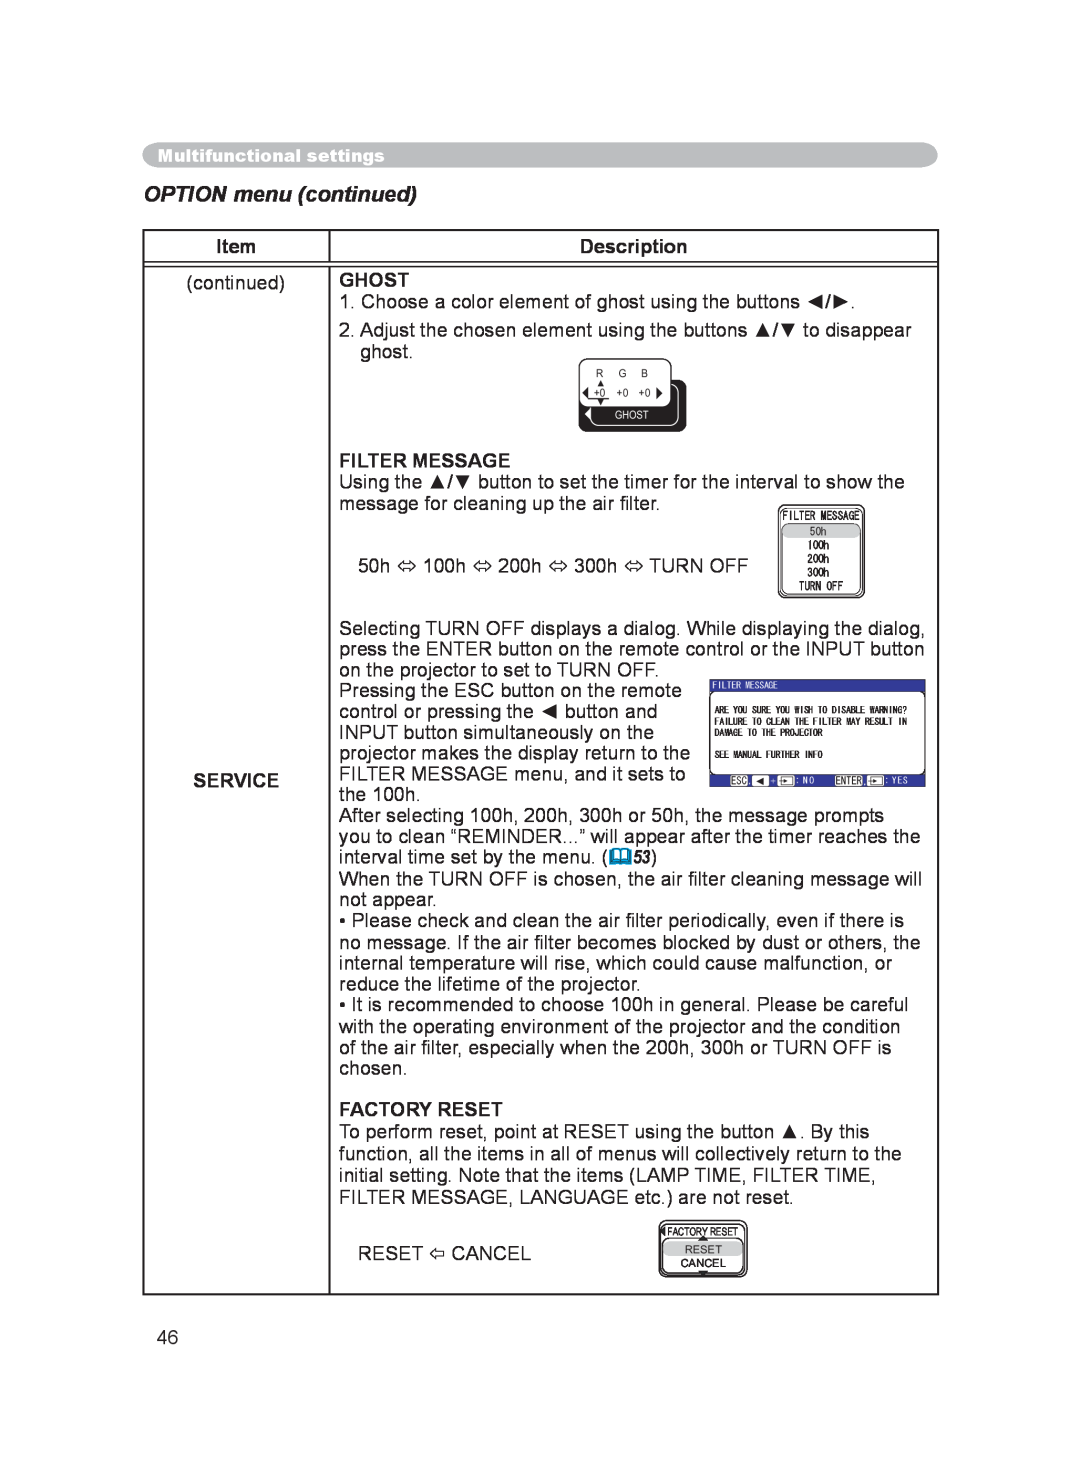 Hitachi PJ-LC9 user manual OPTION menu continued, Description, Ghost, Filter Message, Service, Factory Reset 